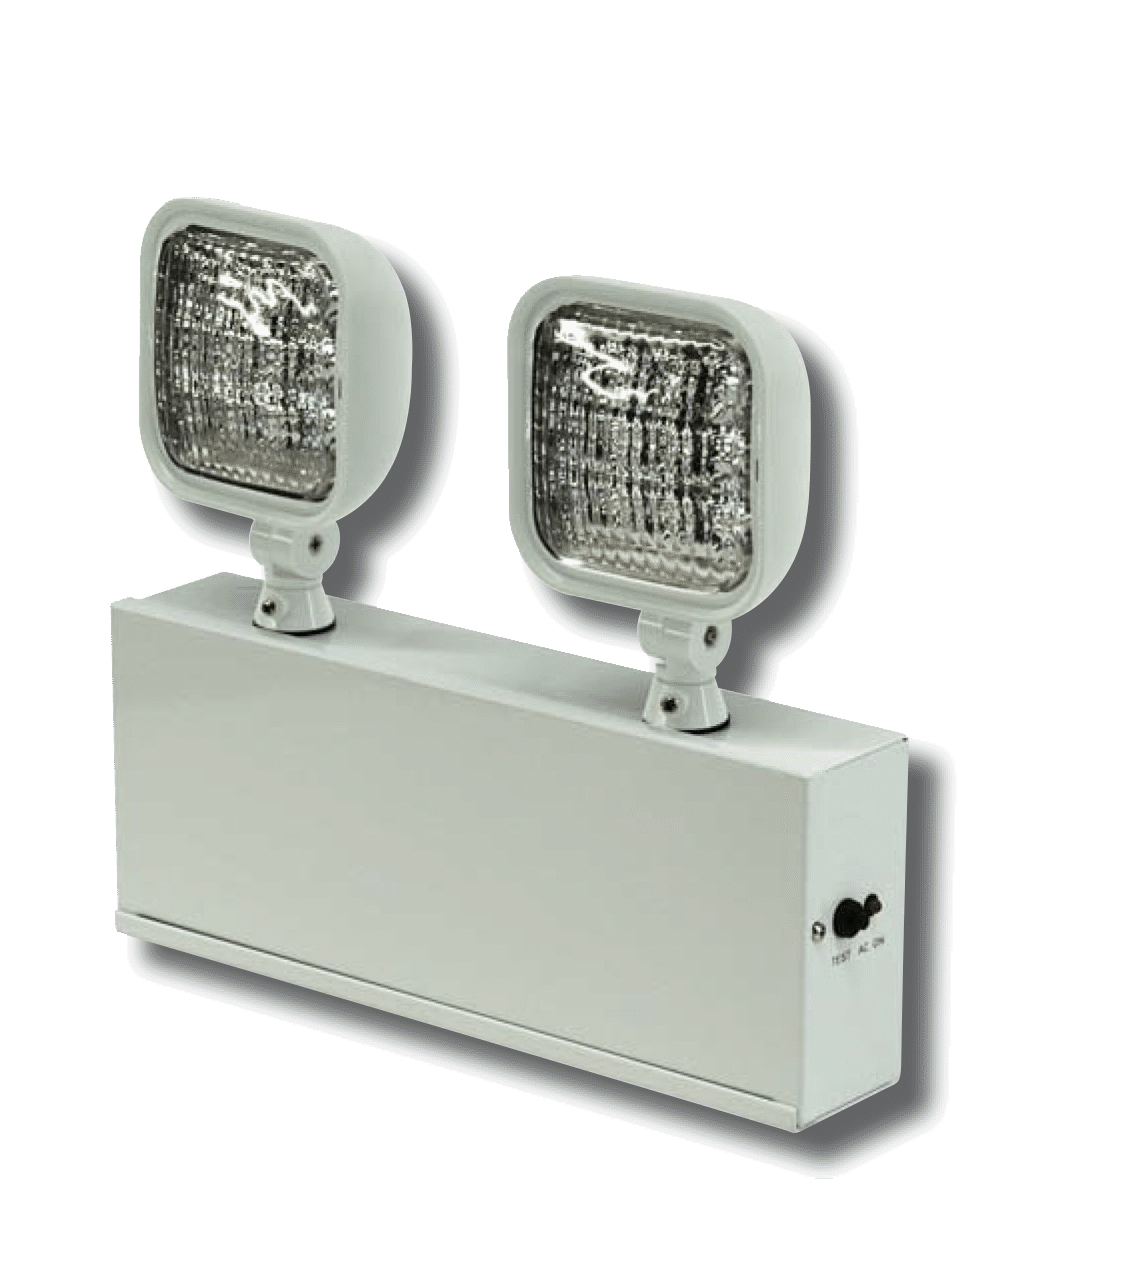 Westgate LEDSDXR627 Indoor Led Emergency Light With Remote Capability - White